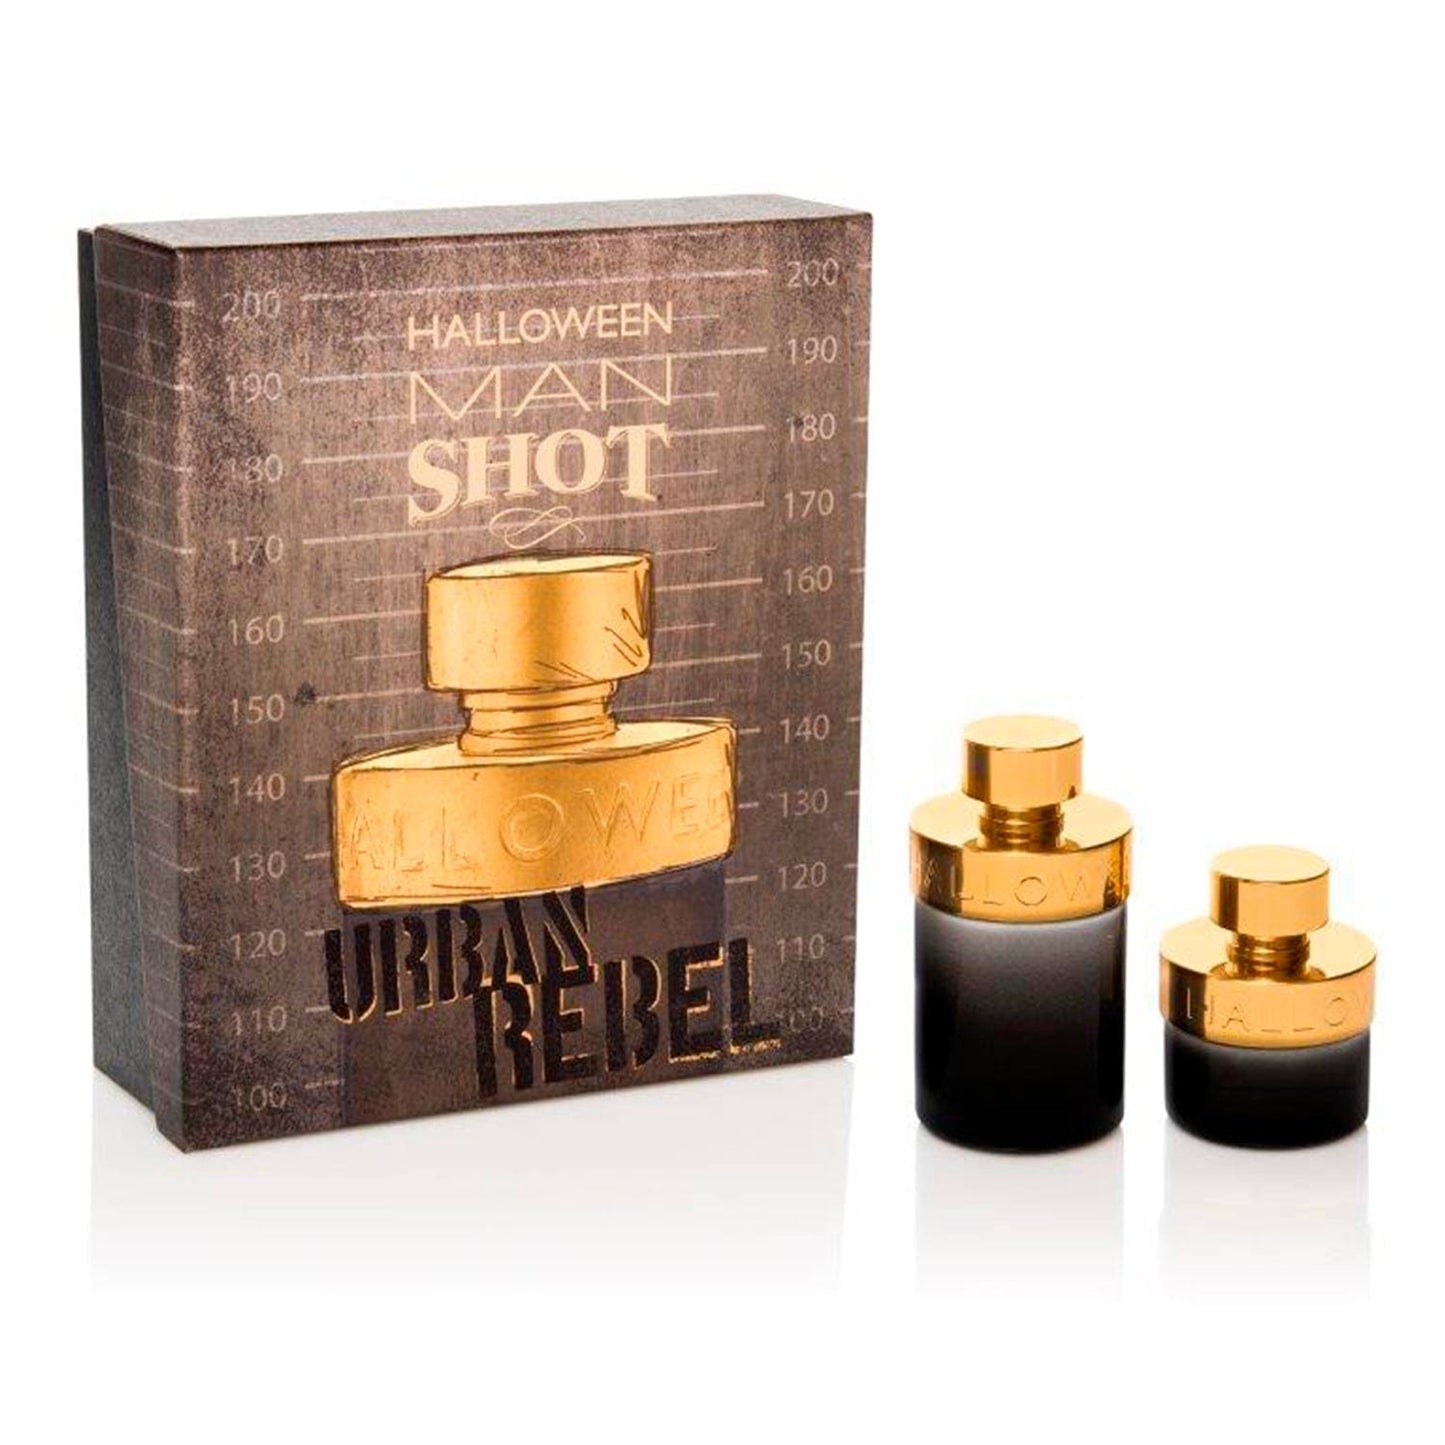 SET HALLOWEEN SHOT 125ML 2PZAS CAB - J DEL POZO - Adrissa Beauty - Perfumes y colonias